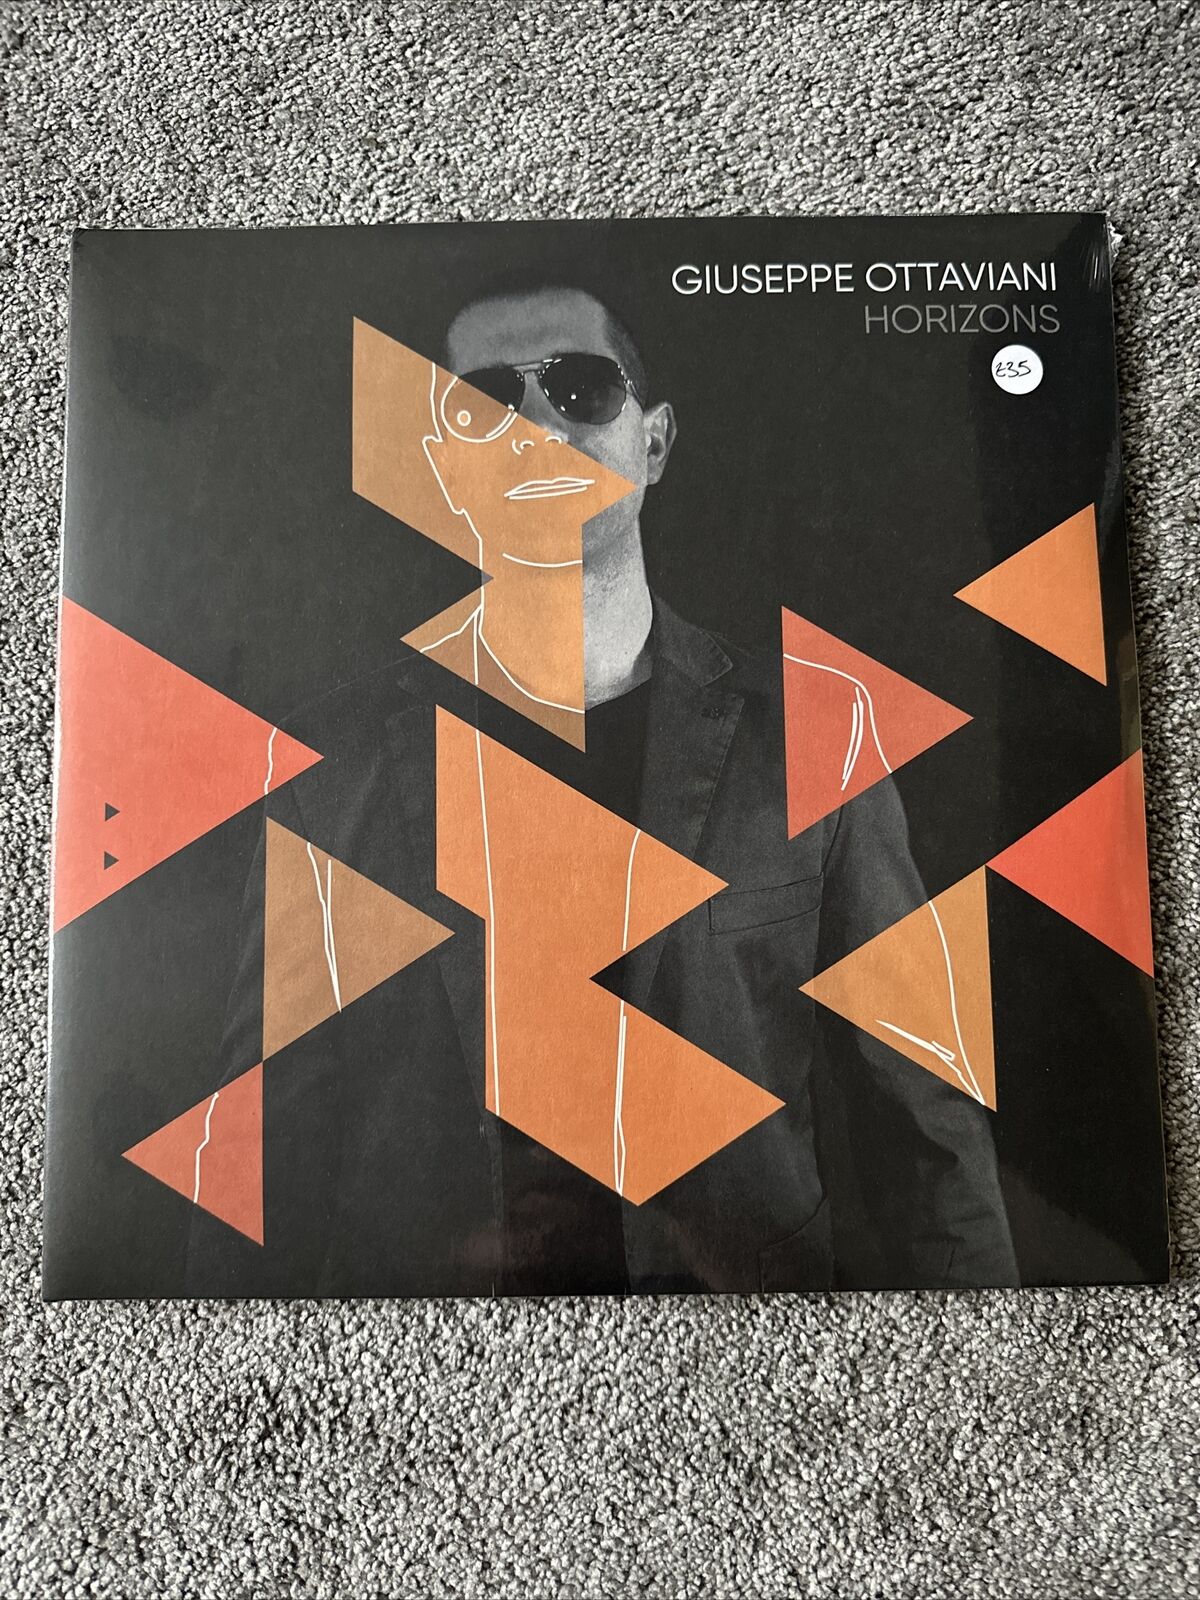 OTTAVIANI, Giuseppe - Horizons - Vinyl (gatefold 2xLP)